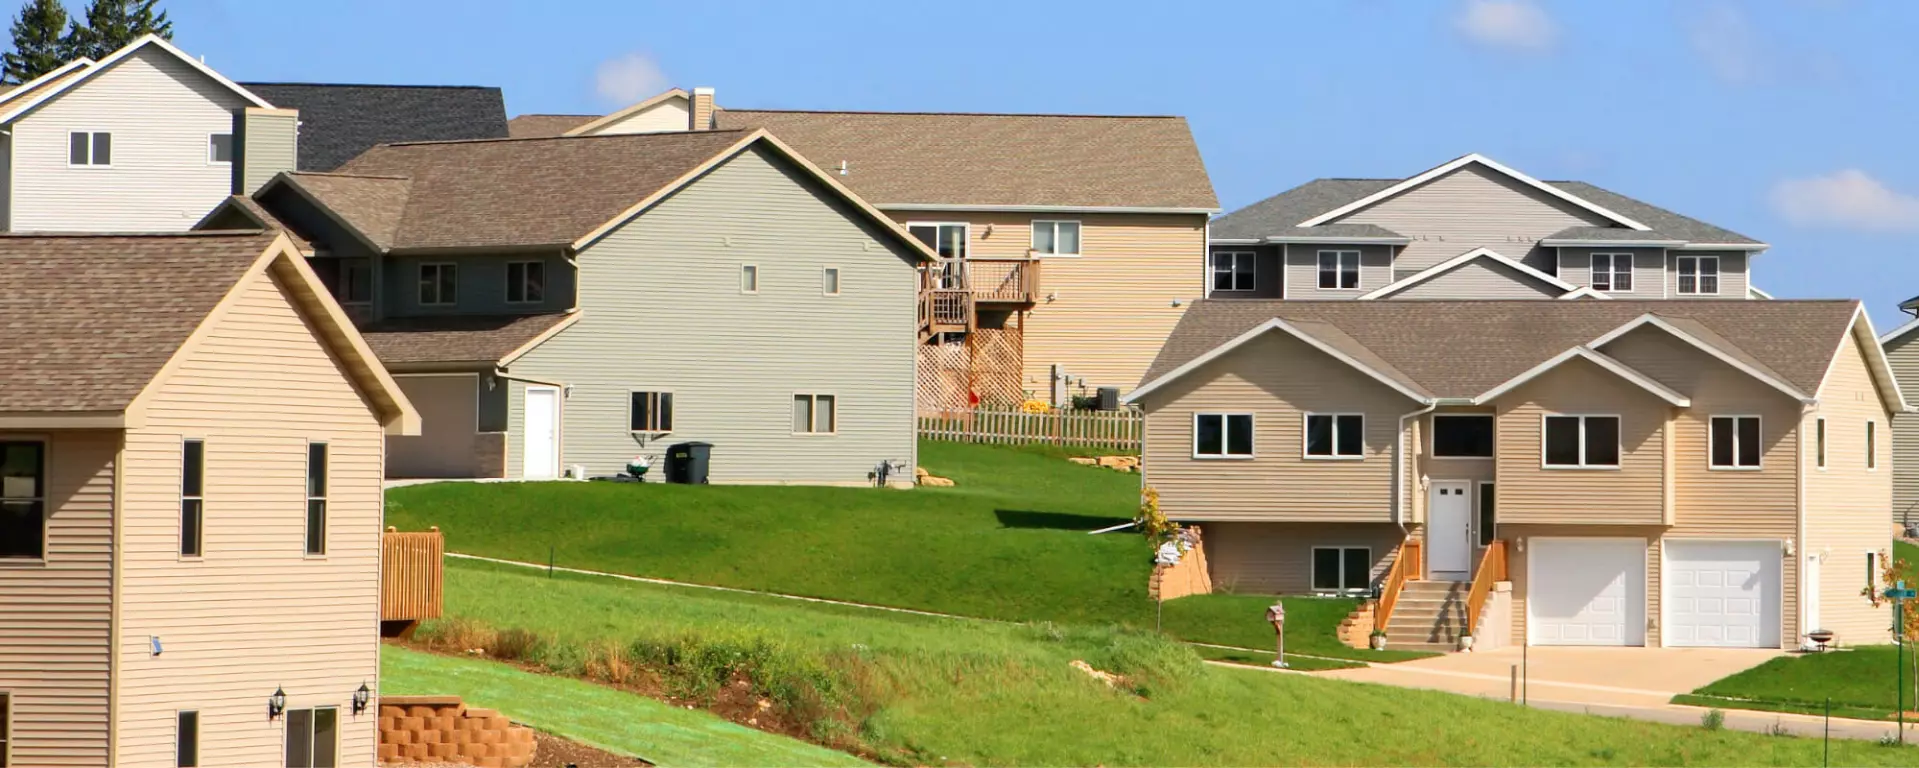 How to Help Rural Borrowers Overcome Homeownership Hurdles